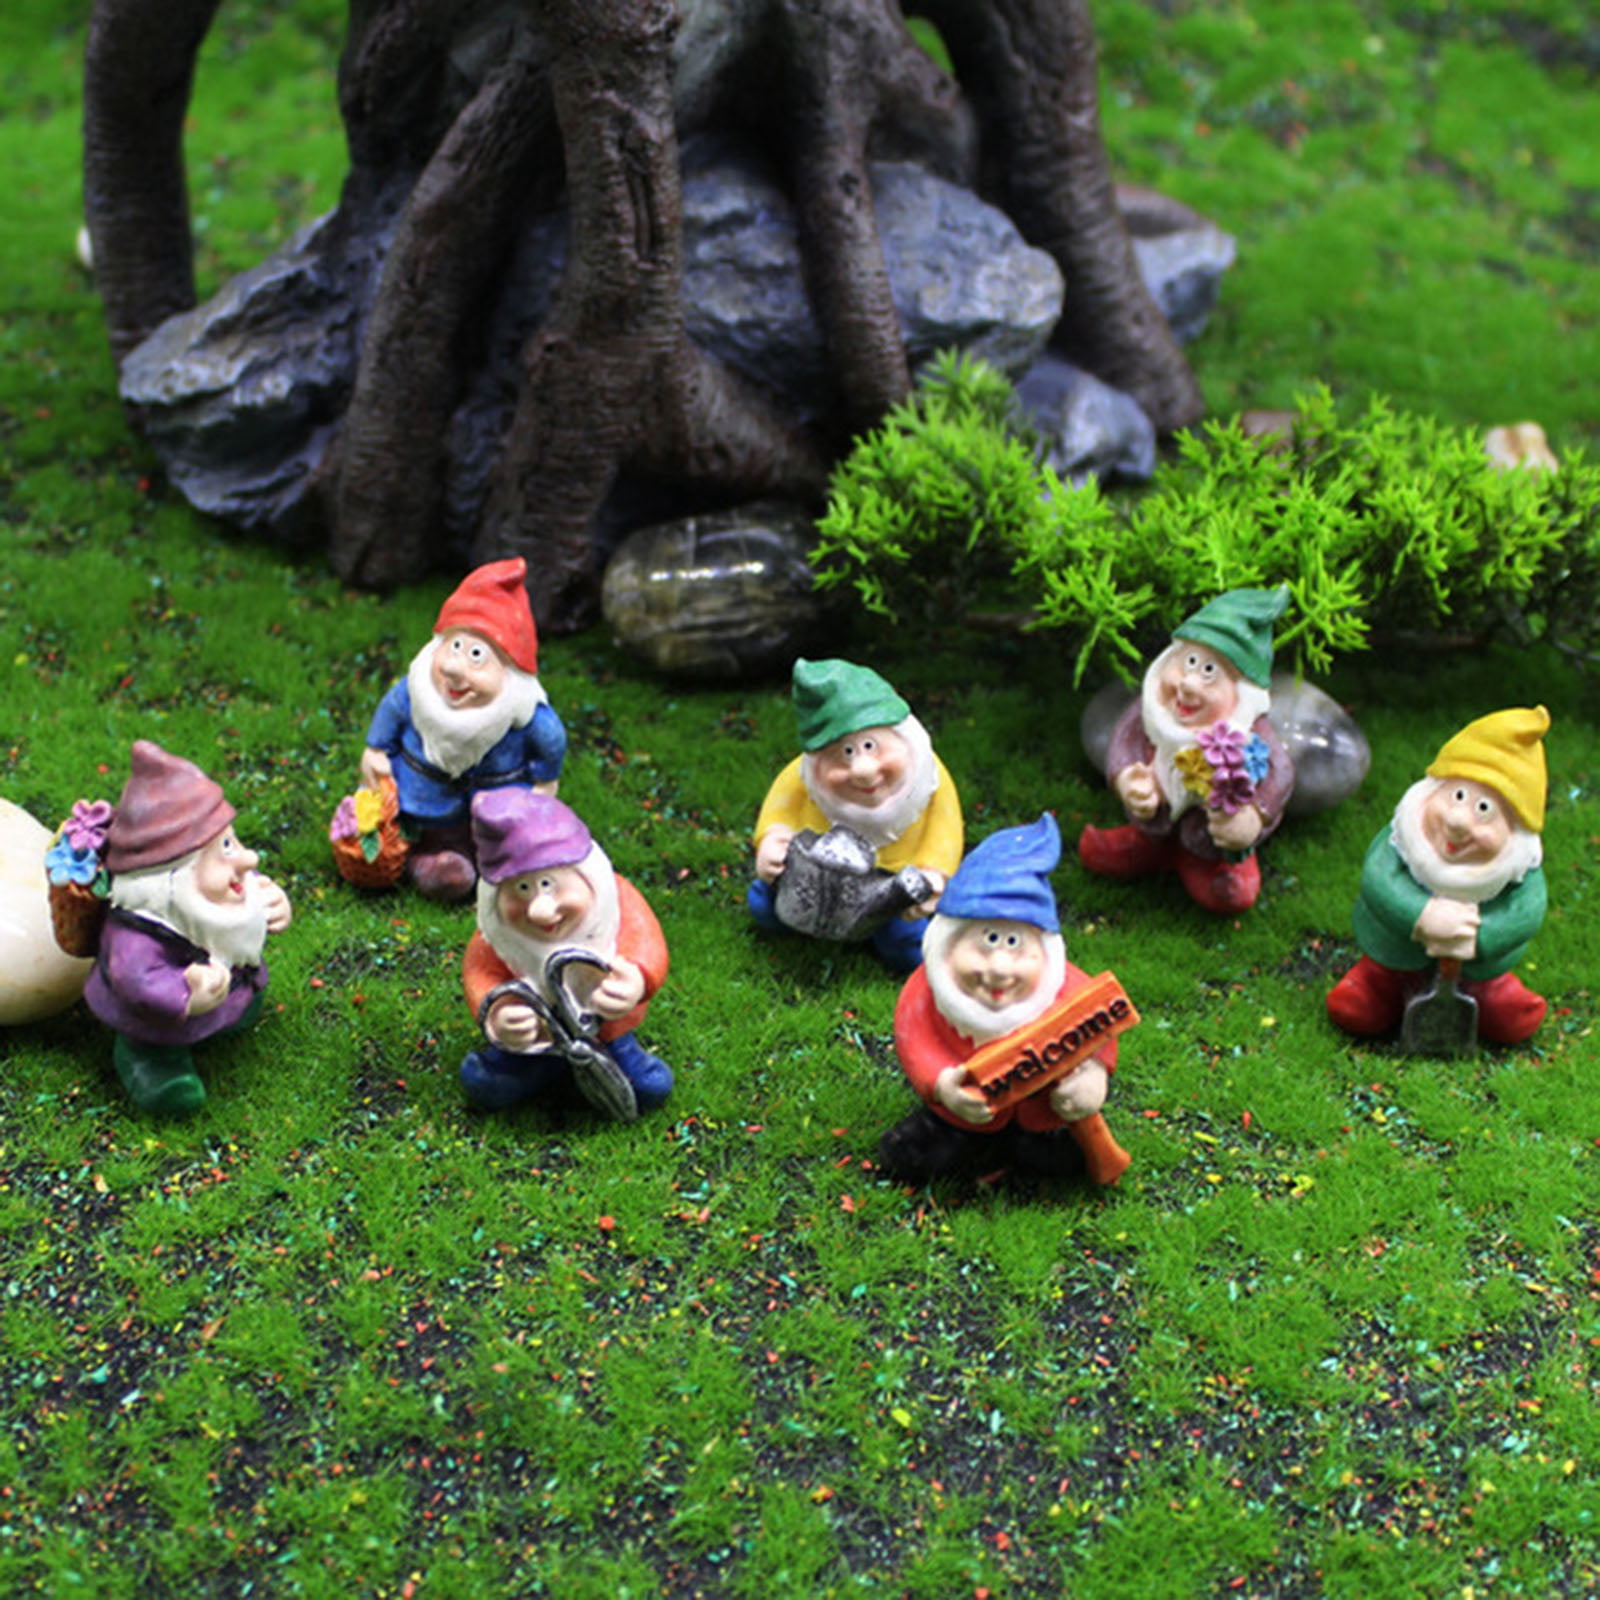 Dolls House Large Garden Gnome Ornament Statue Miniature Accessory 1:12 Scale